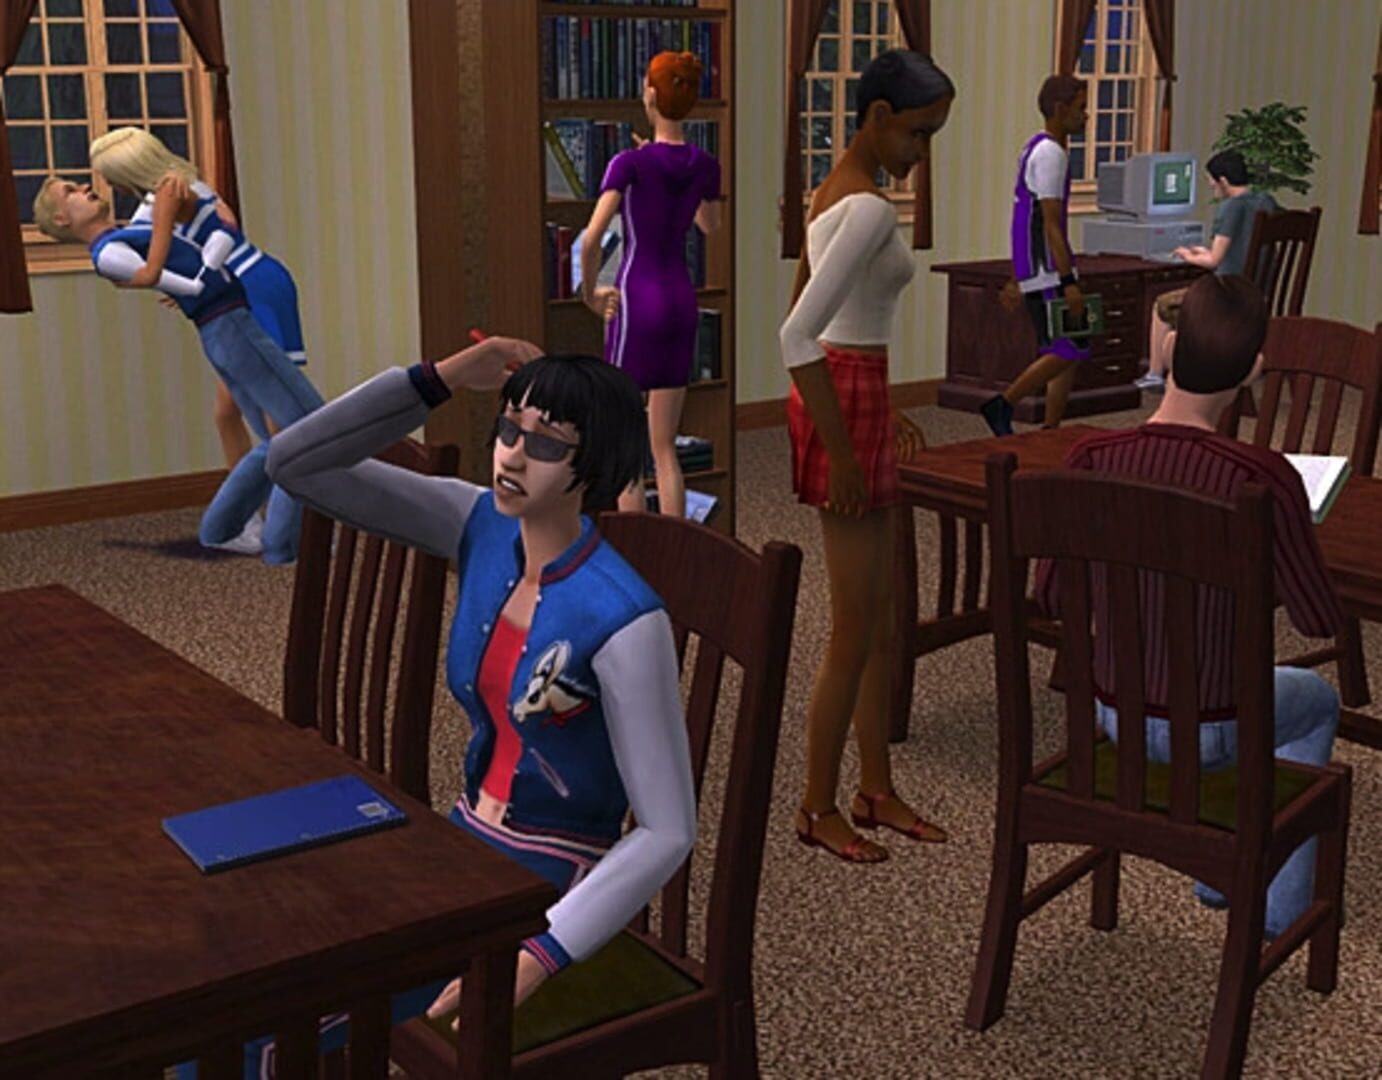 Captura de pantalla - The Sims 2: University